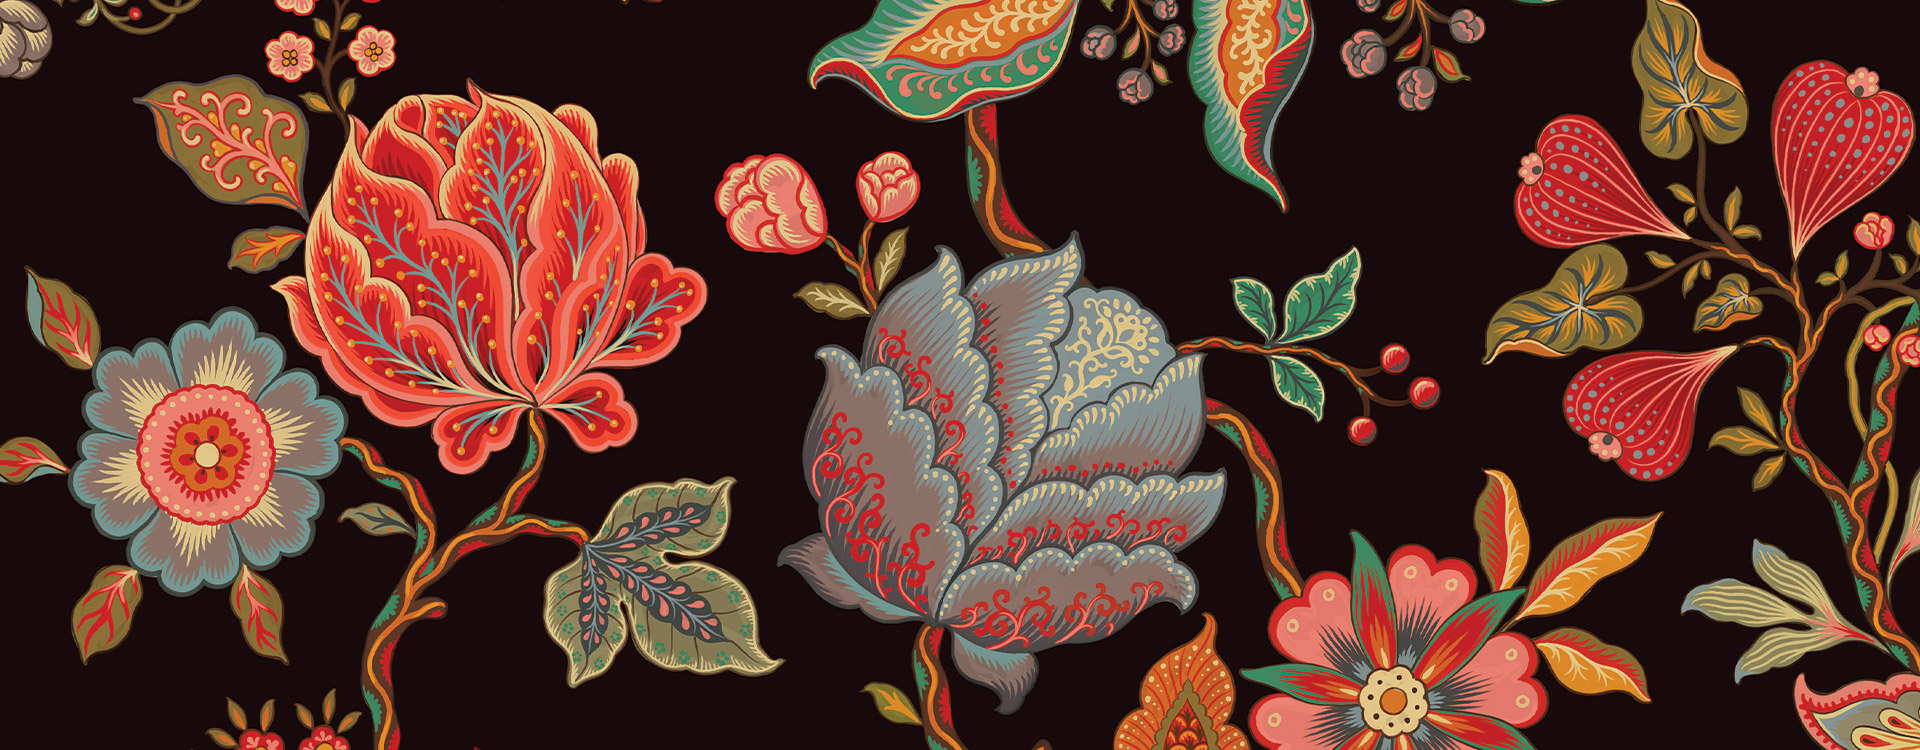 Indian wallpaper fabric